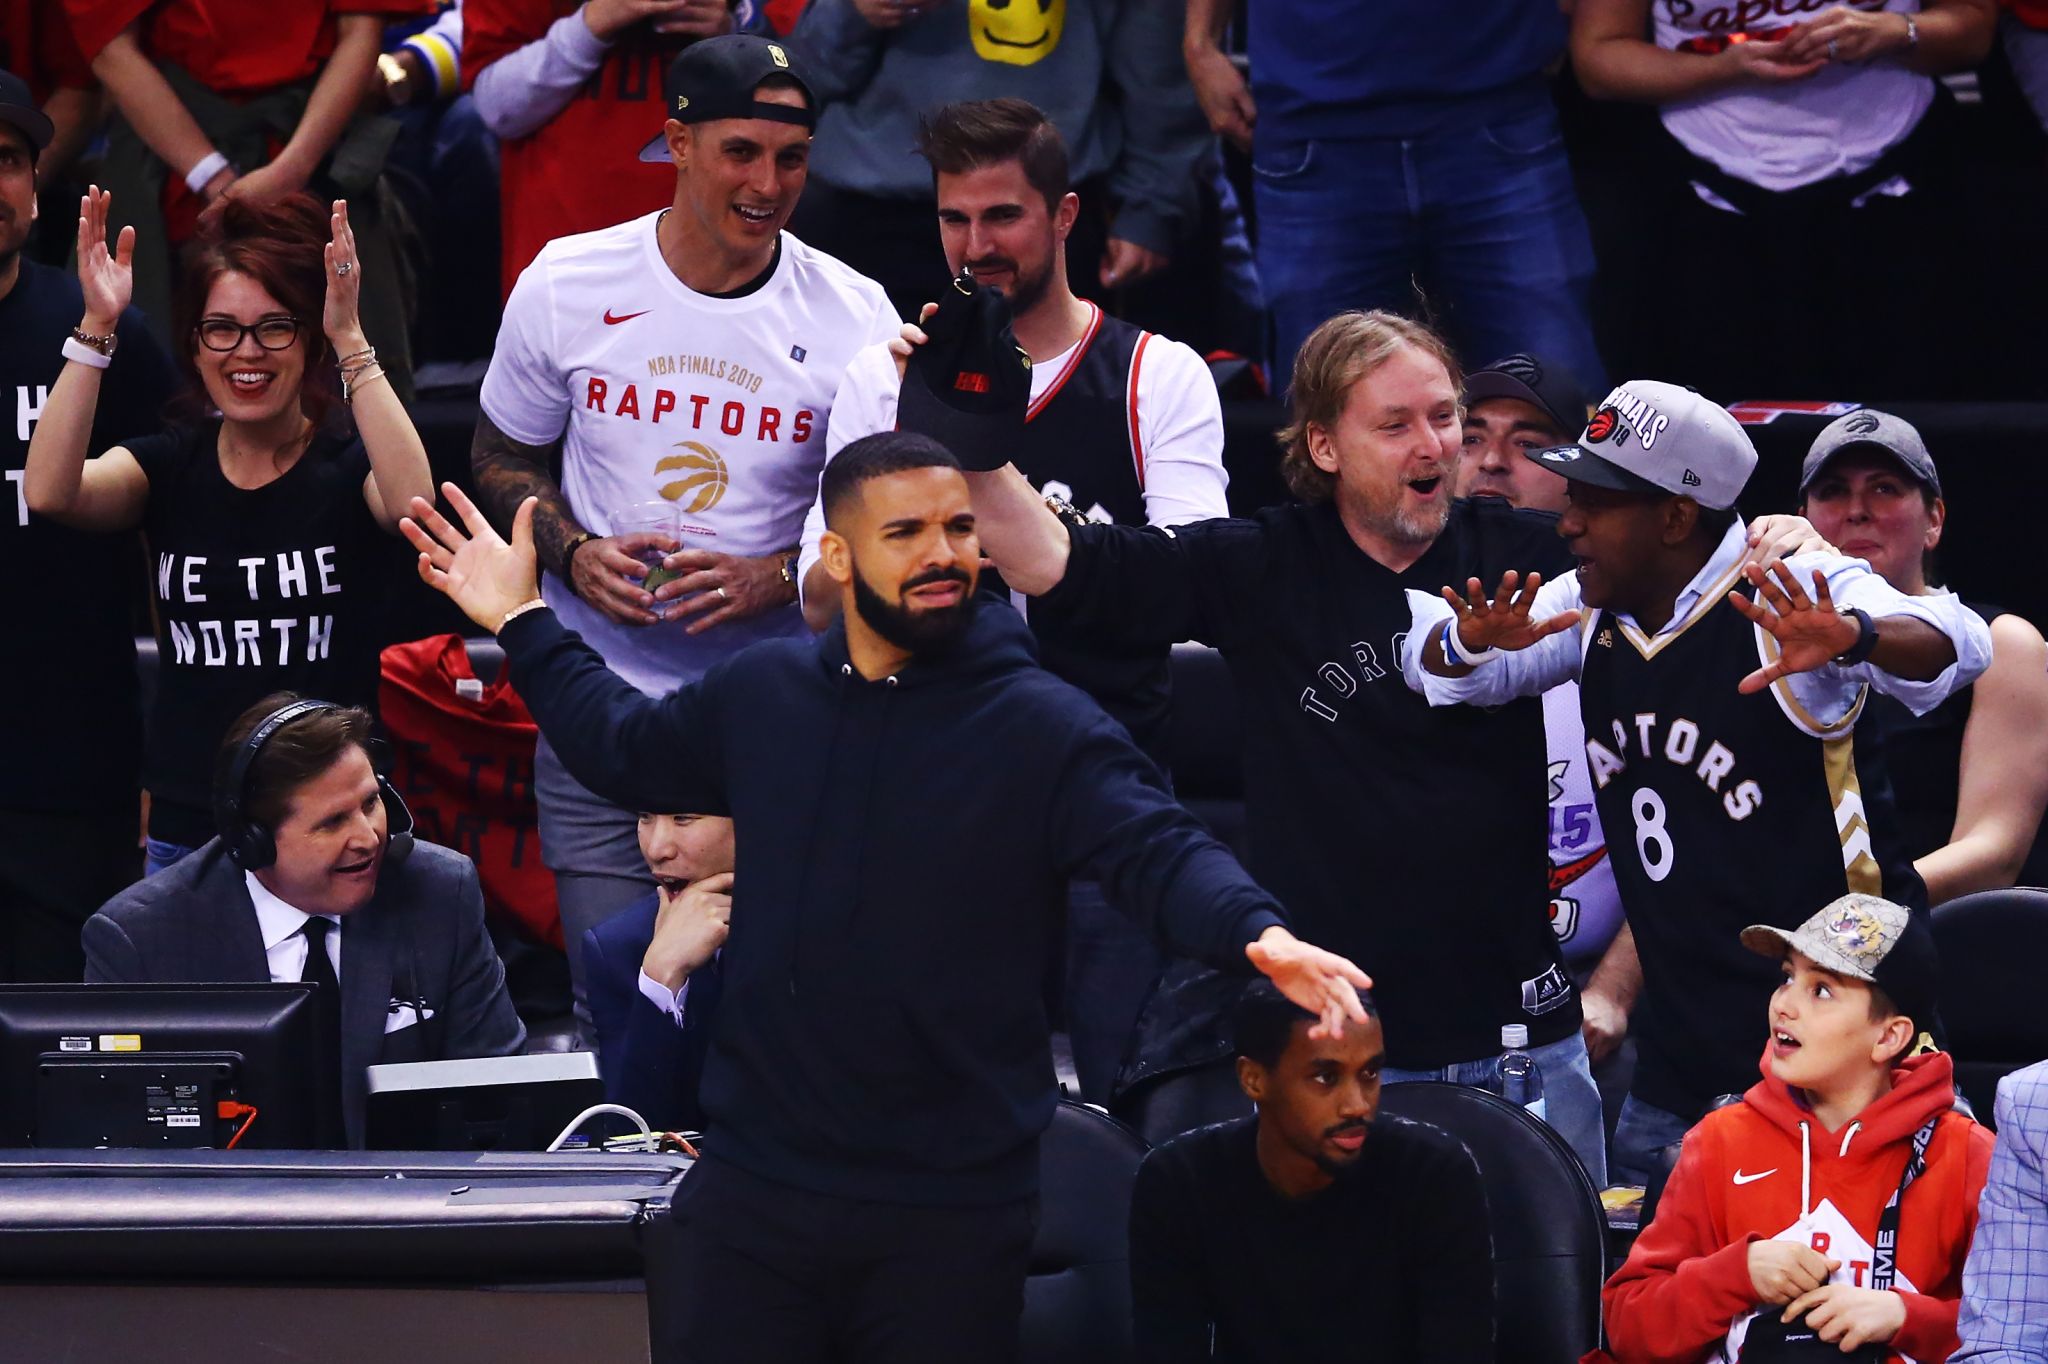 Drake, a Raptors superfan, trolls Bucks at Toronto game with WWE belts